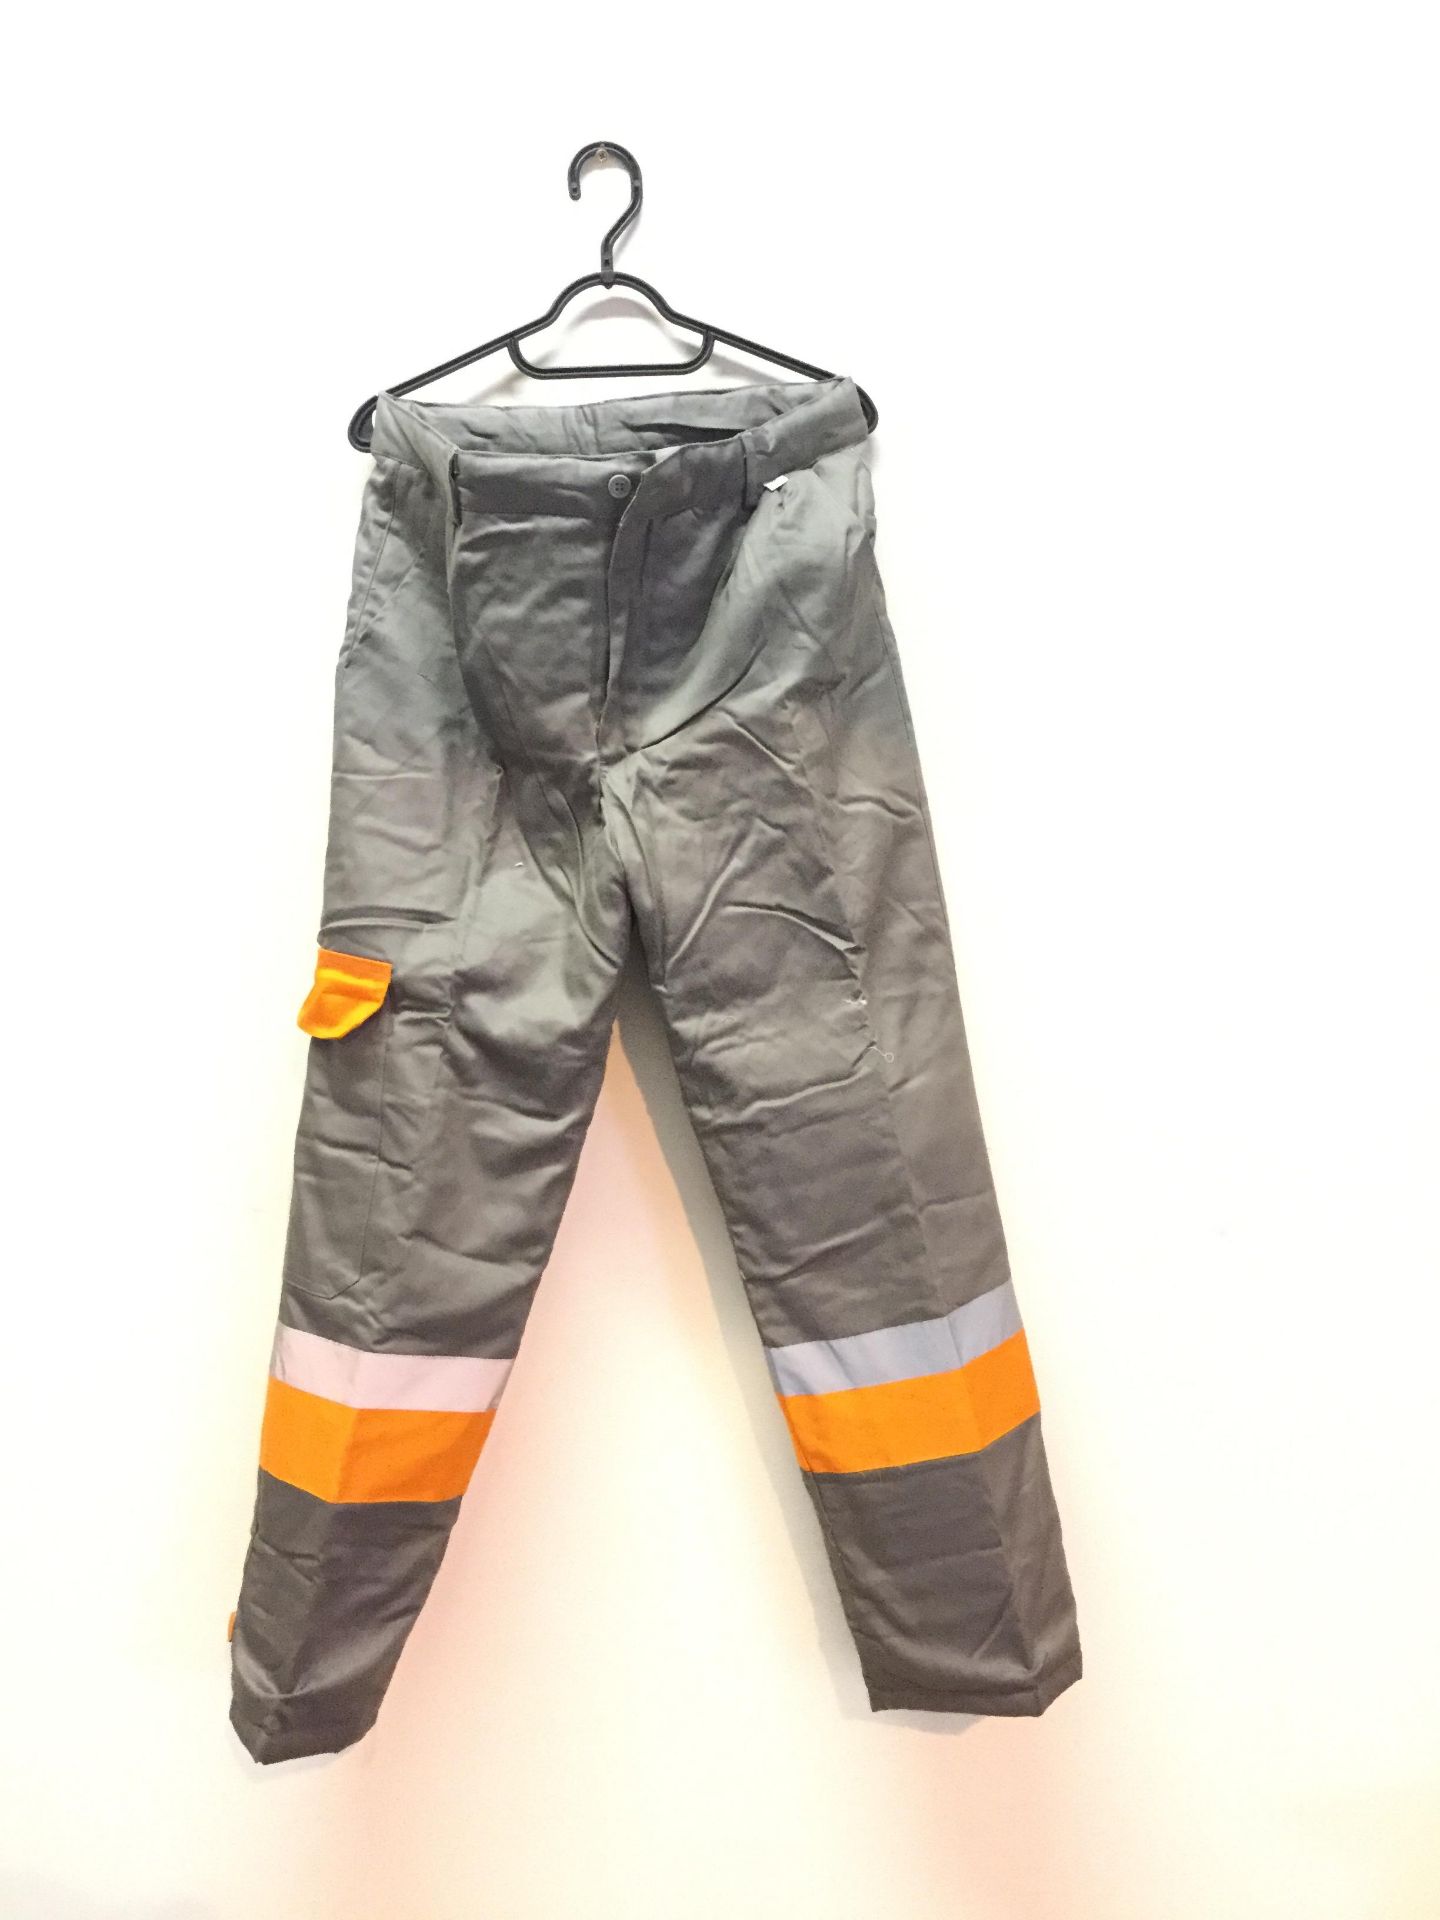 Flame Retardant Winter Trousers - Size 58